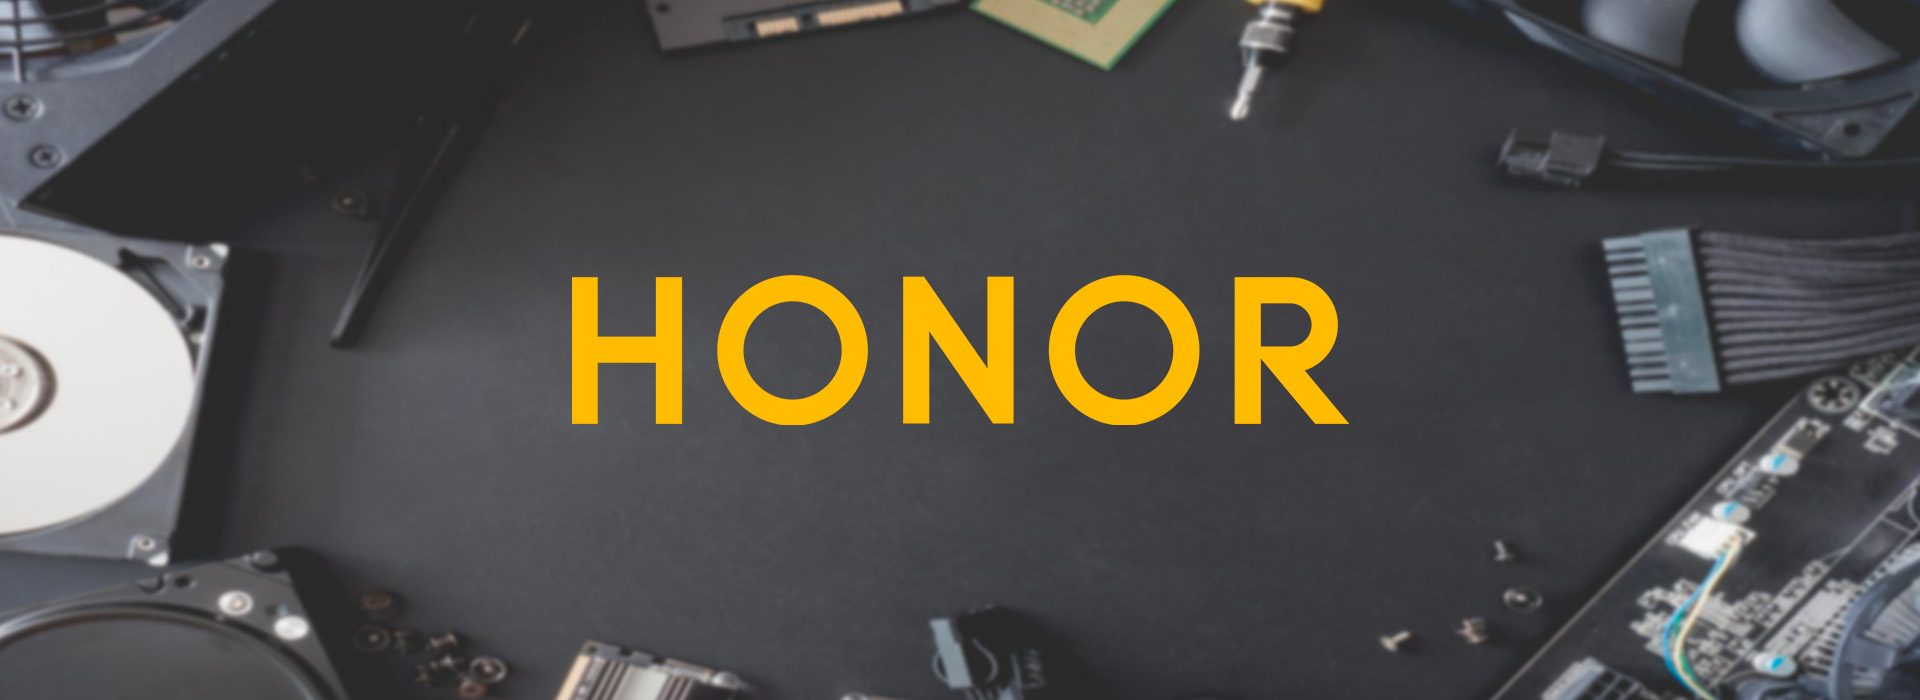 Honor header 2